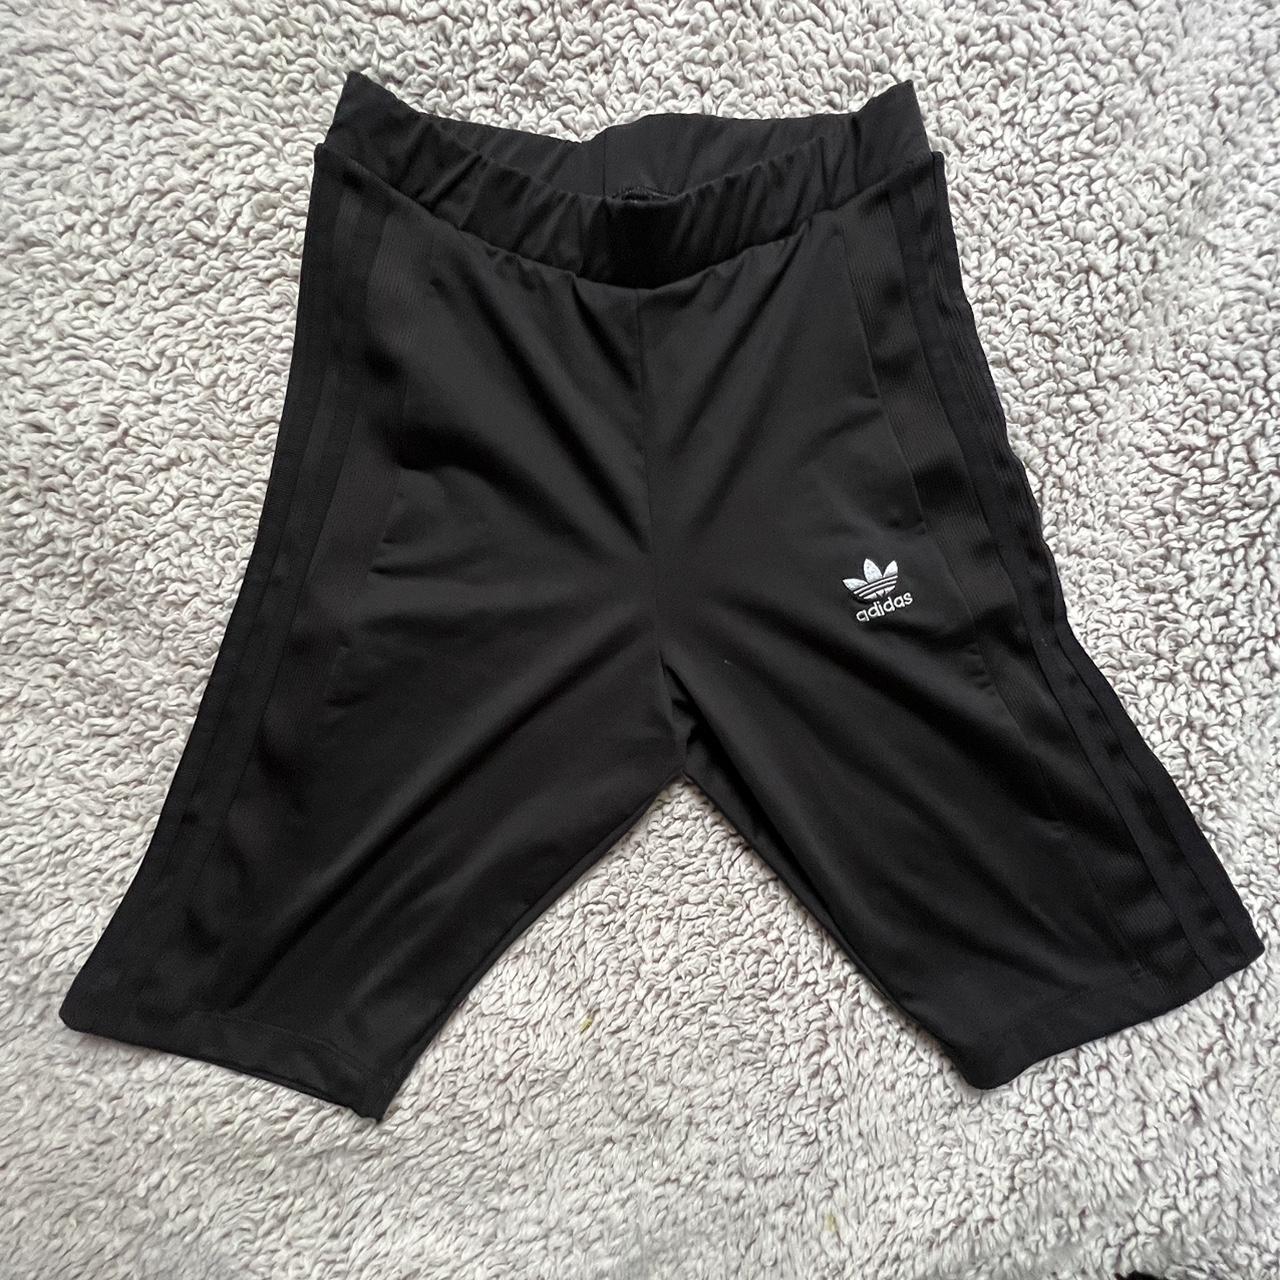 Adidas Originals Black athletic shorts with white - Depop